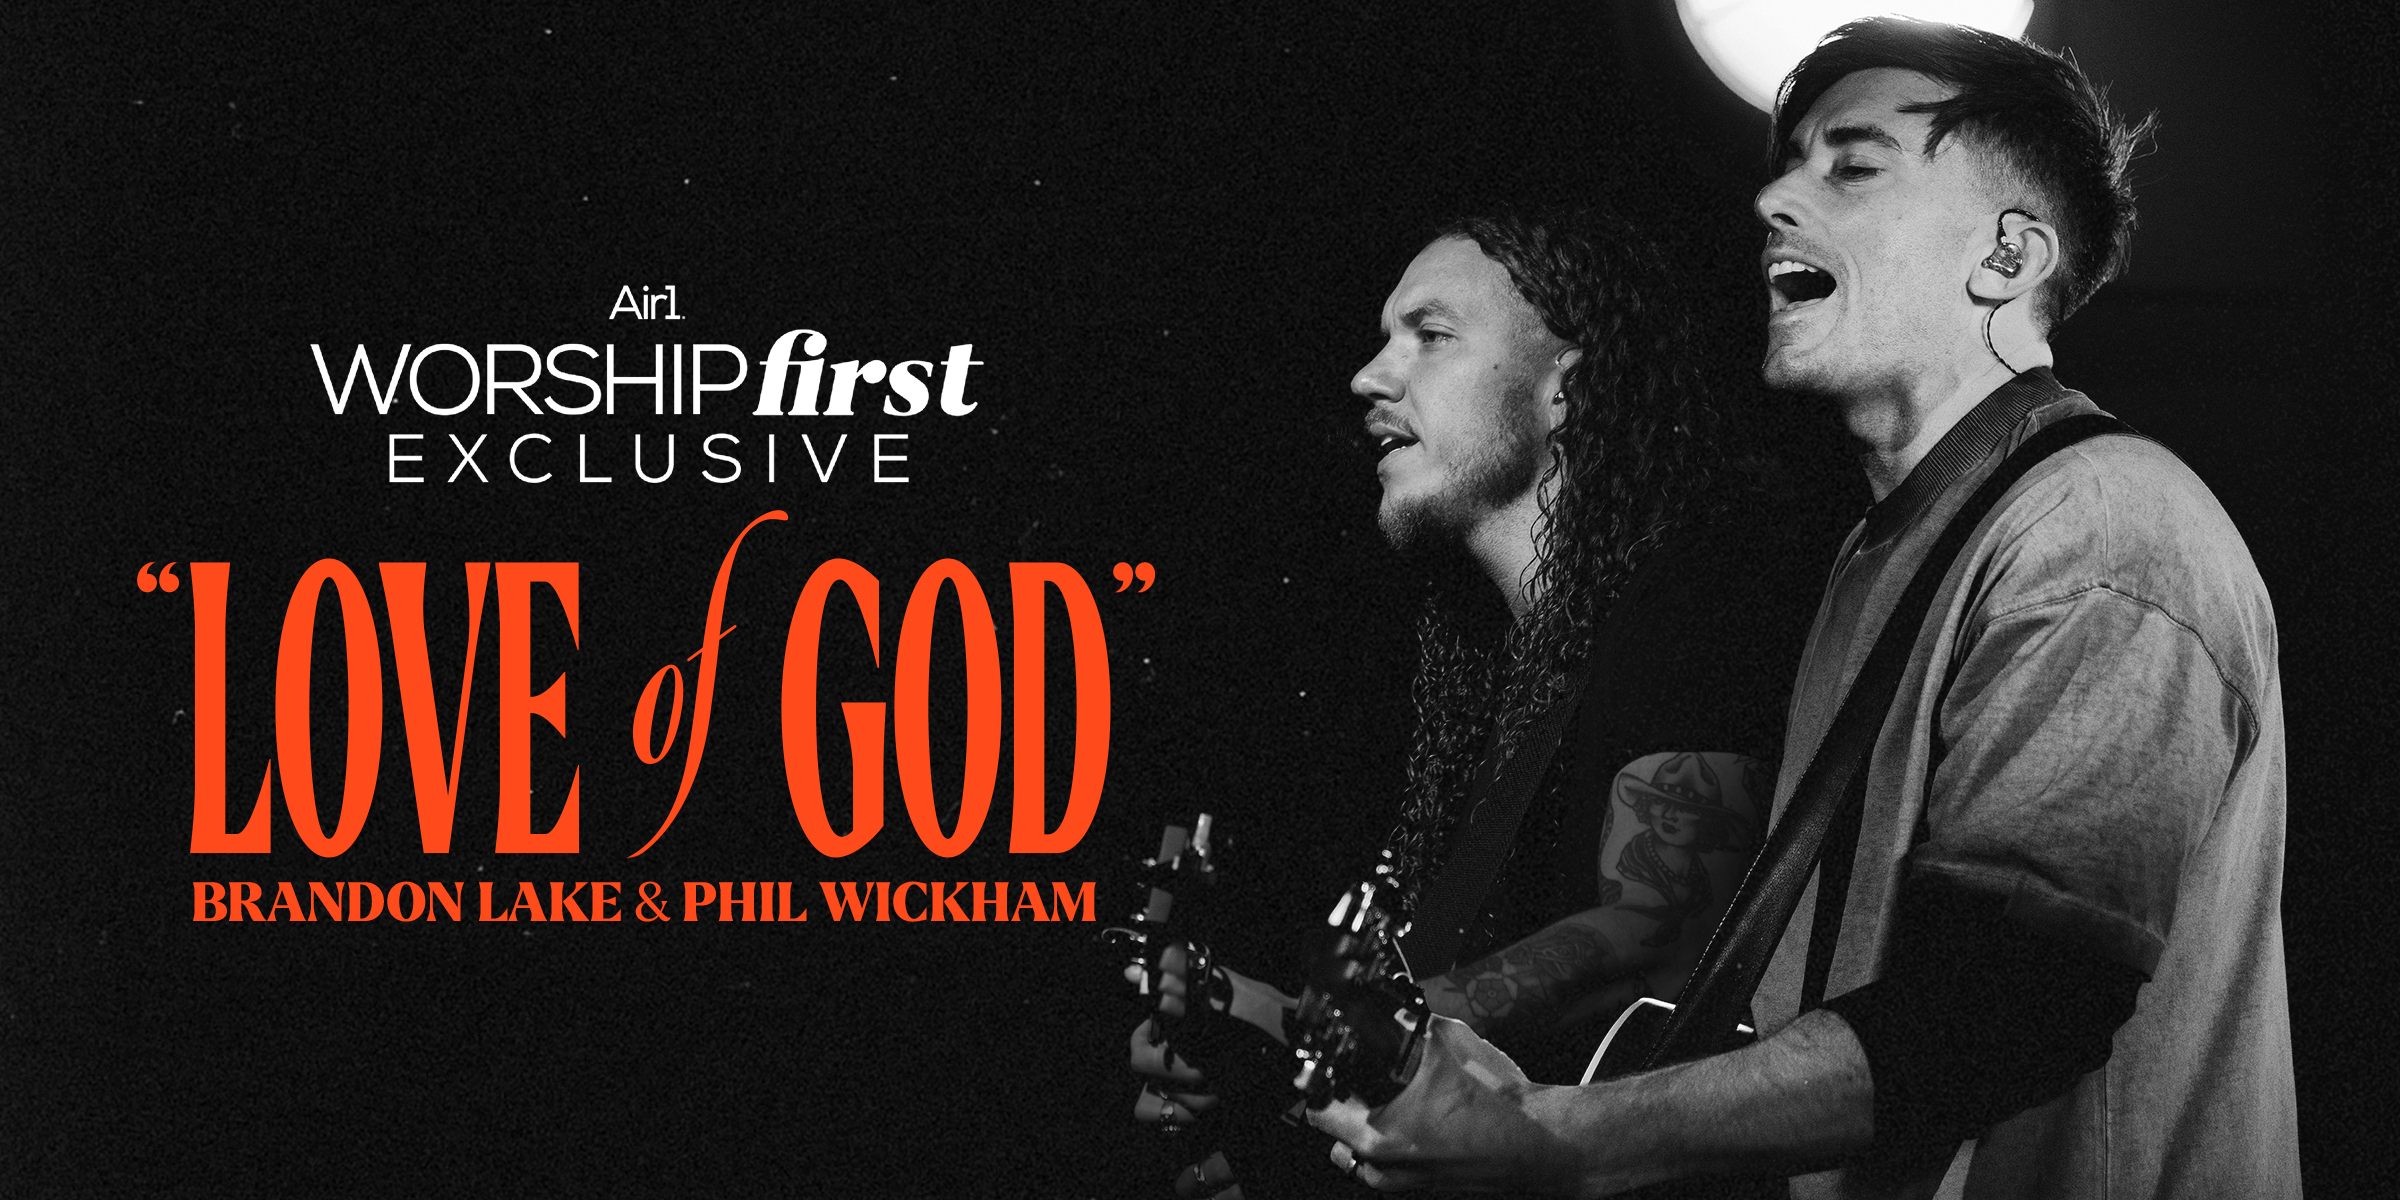 Air1 Worship First Exclusive "Love of God" Brandon Lake & Phil Wickham